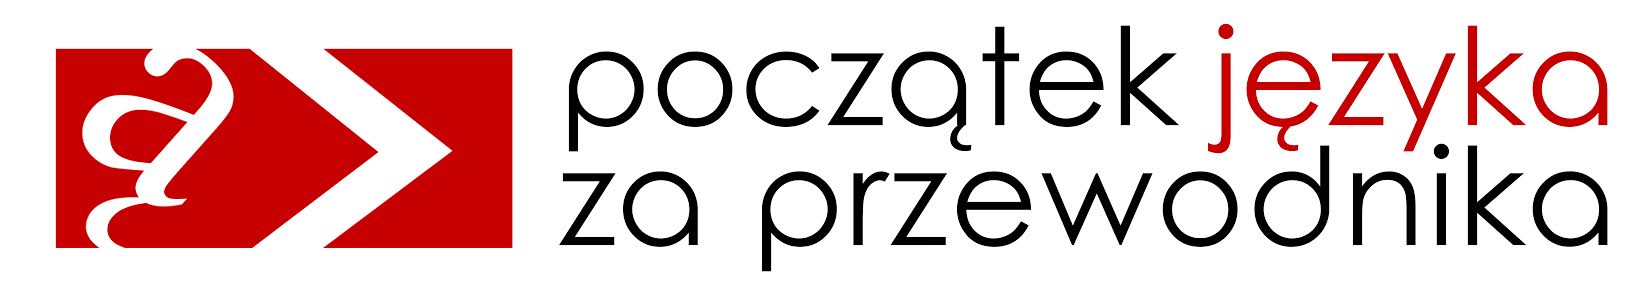 poczatek_jezyka_logo-projektu.jpg (51 KB)